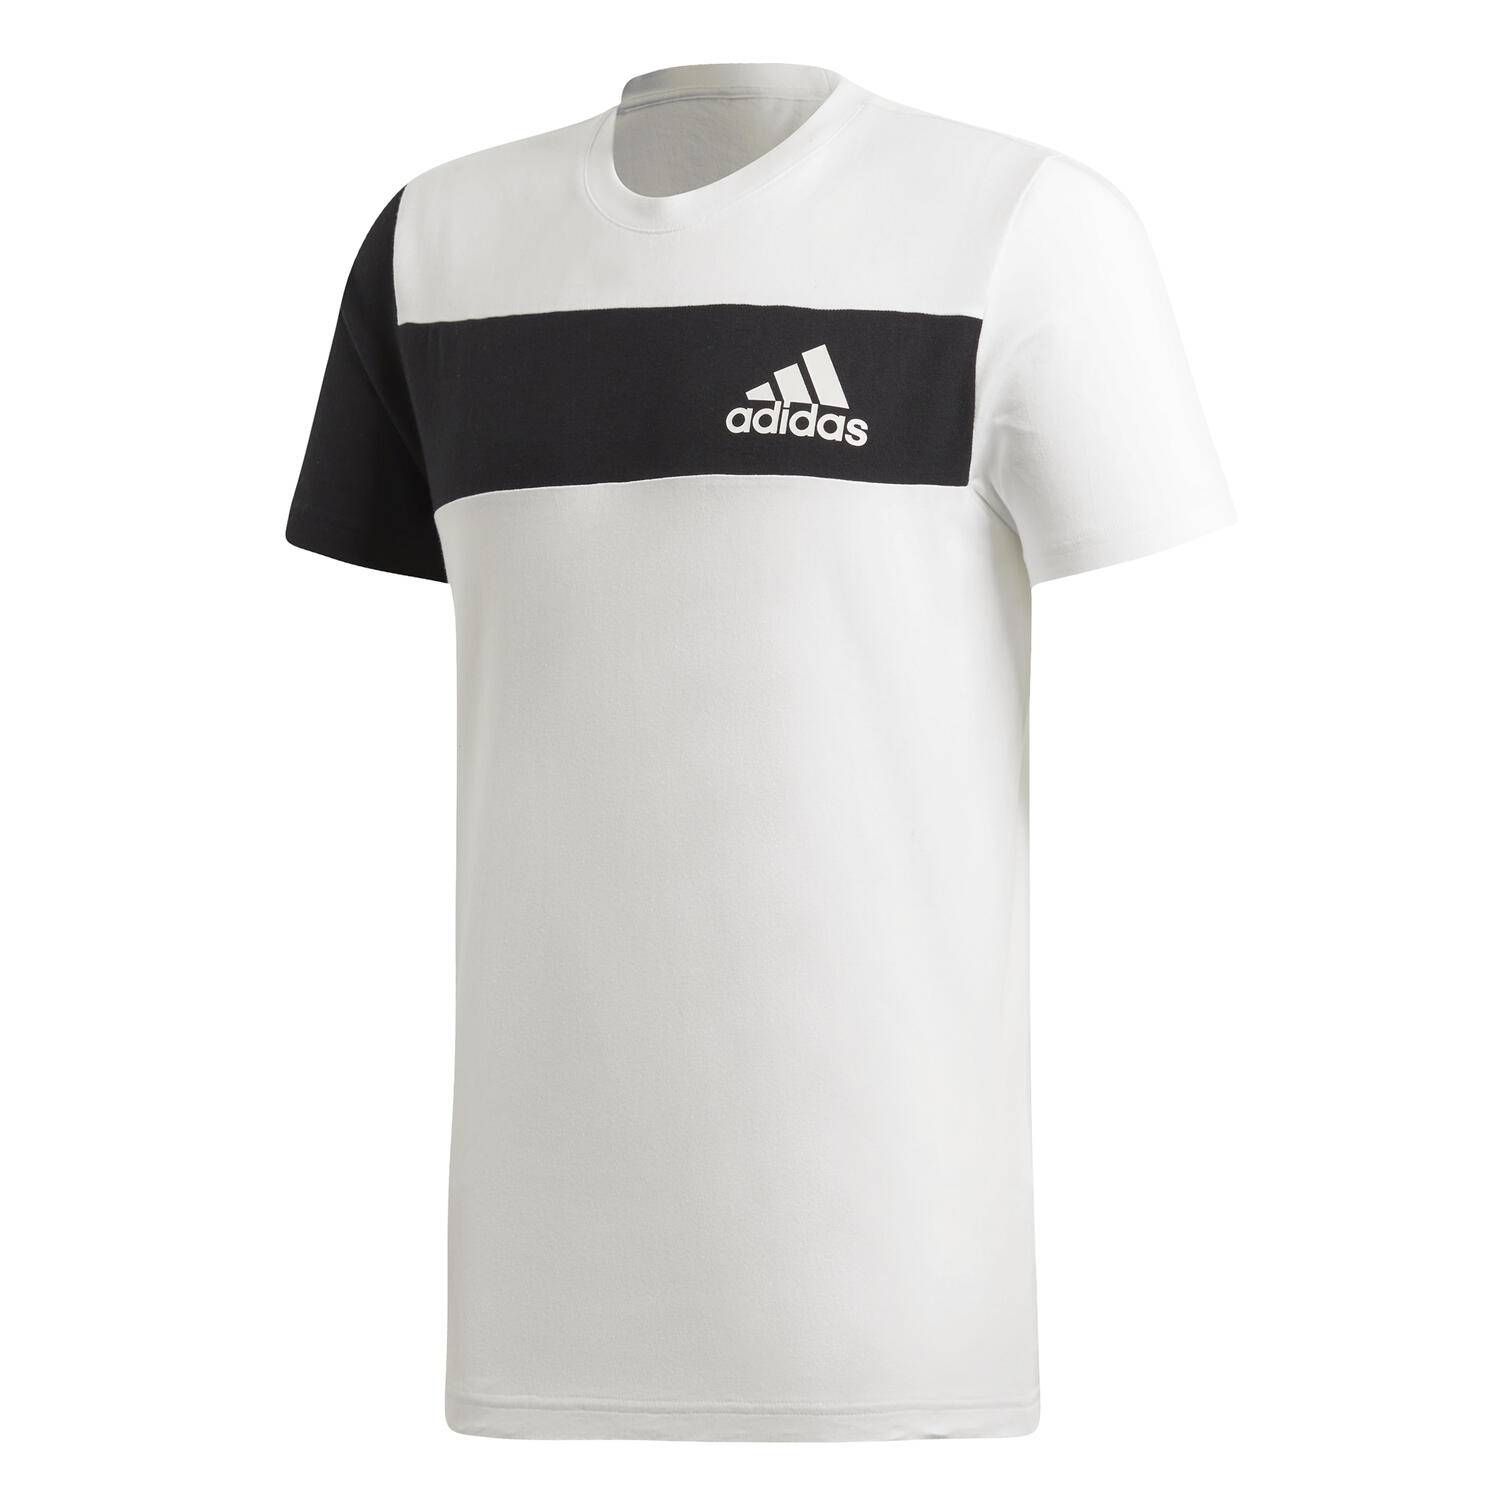 tee shirt adidas blanc et noir